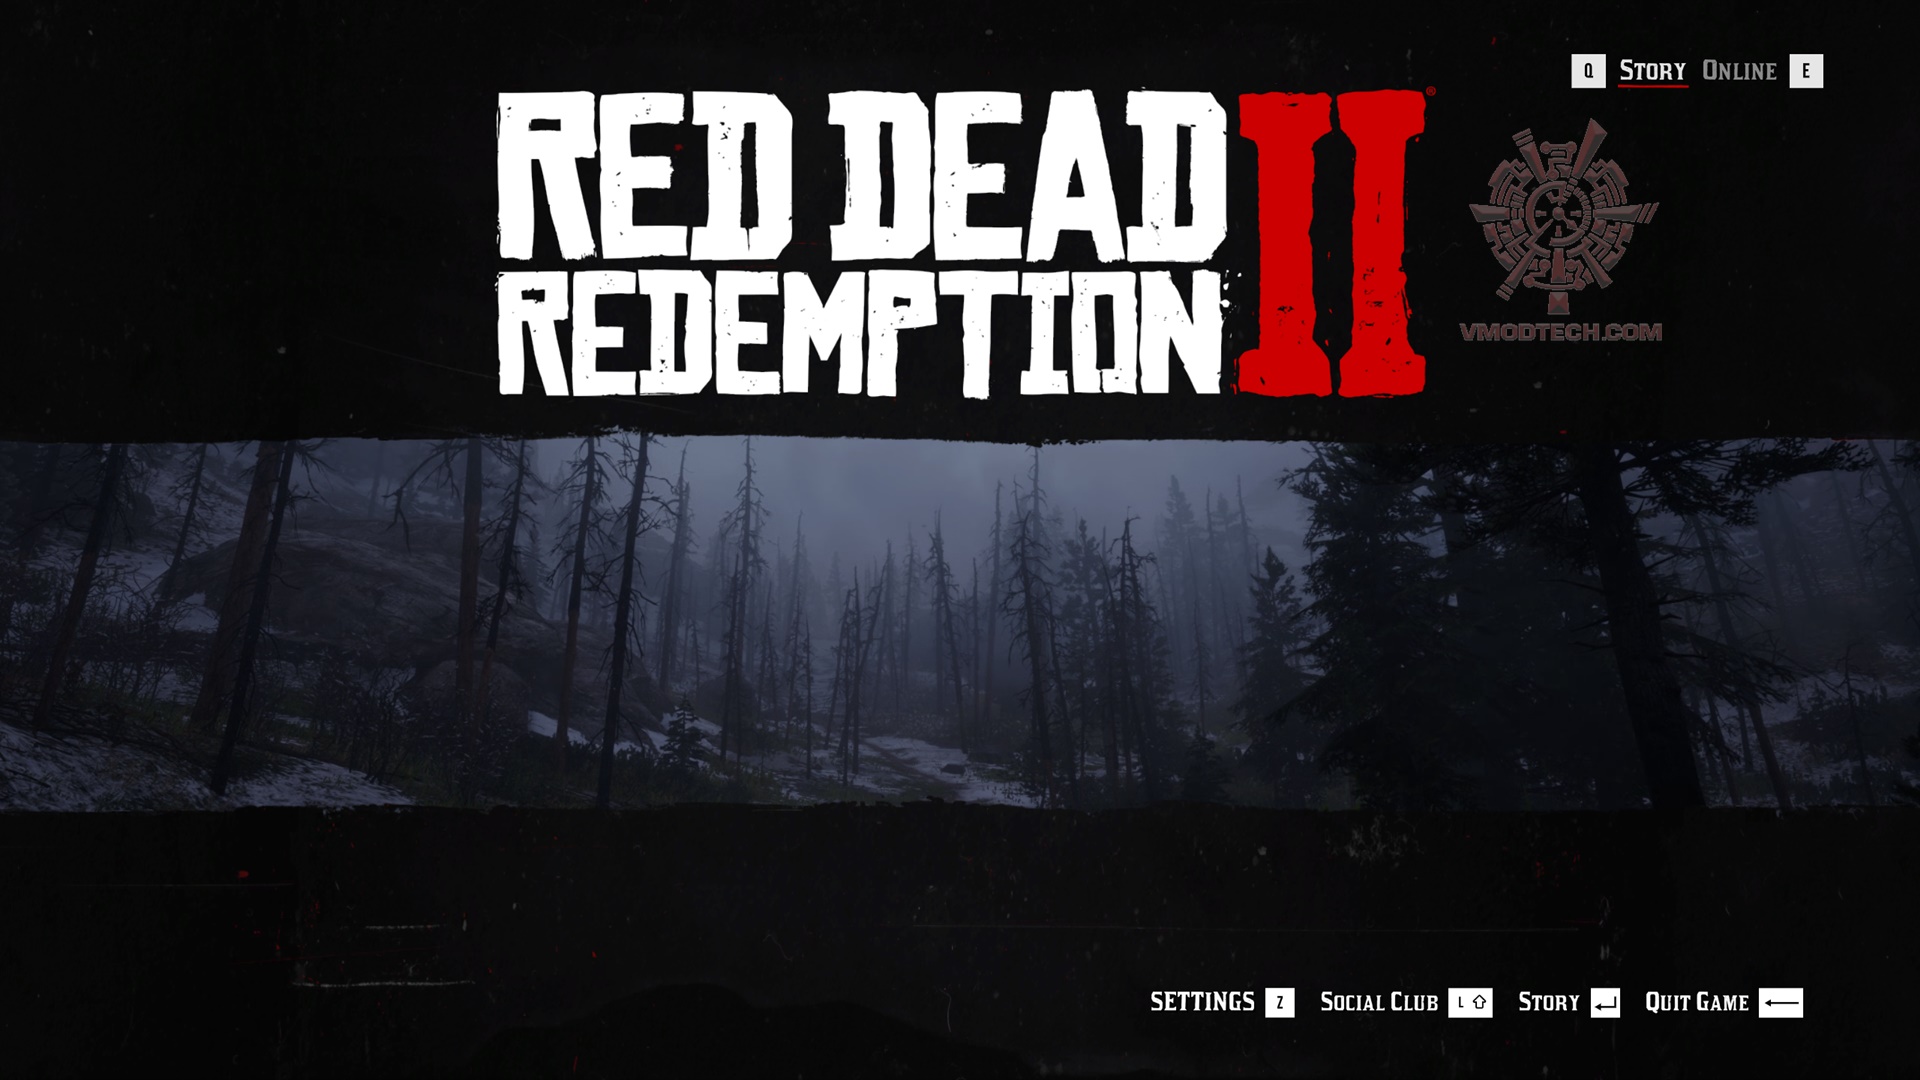 red dead redemption ii screenshot 20191107 22345645 MSI GeForce GTX 1650 SUPER GAMING X Review